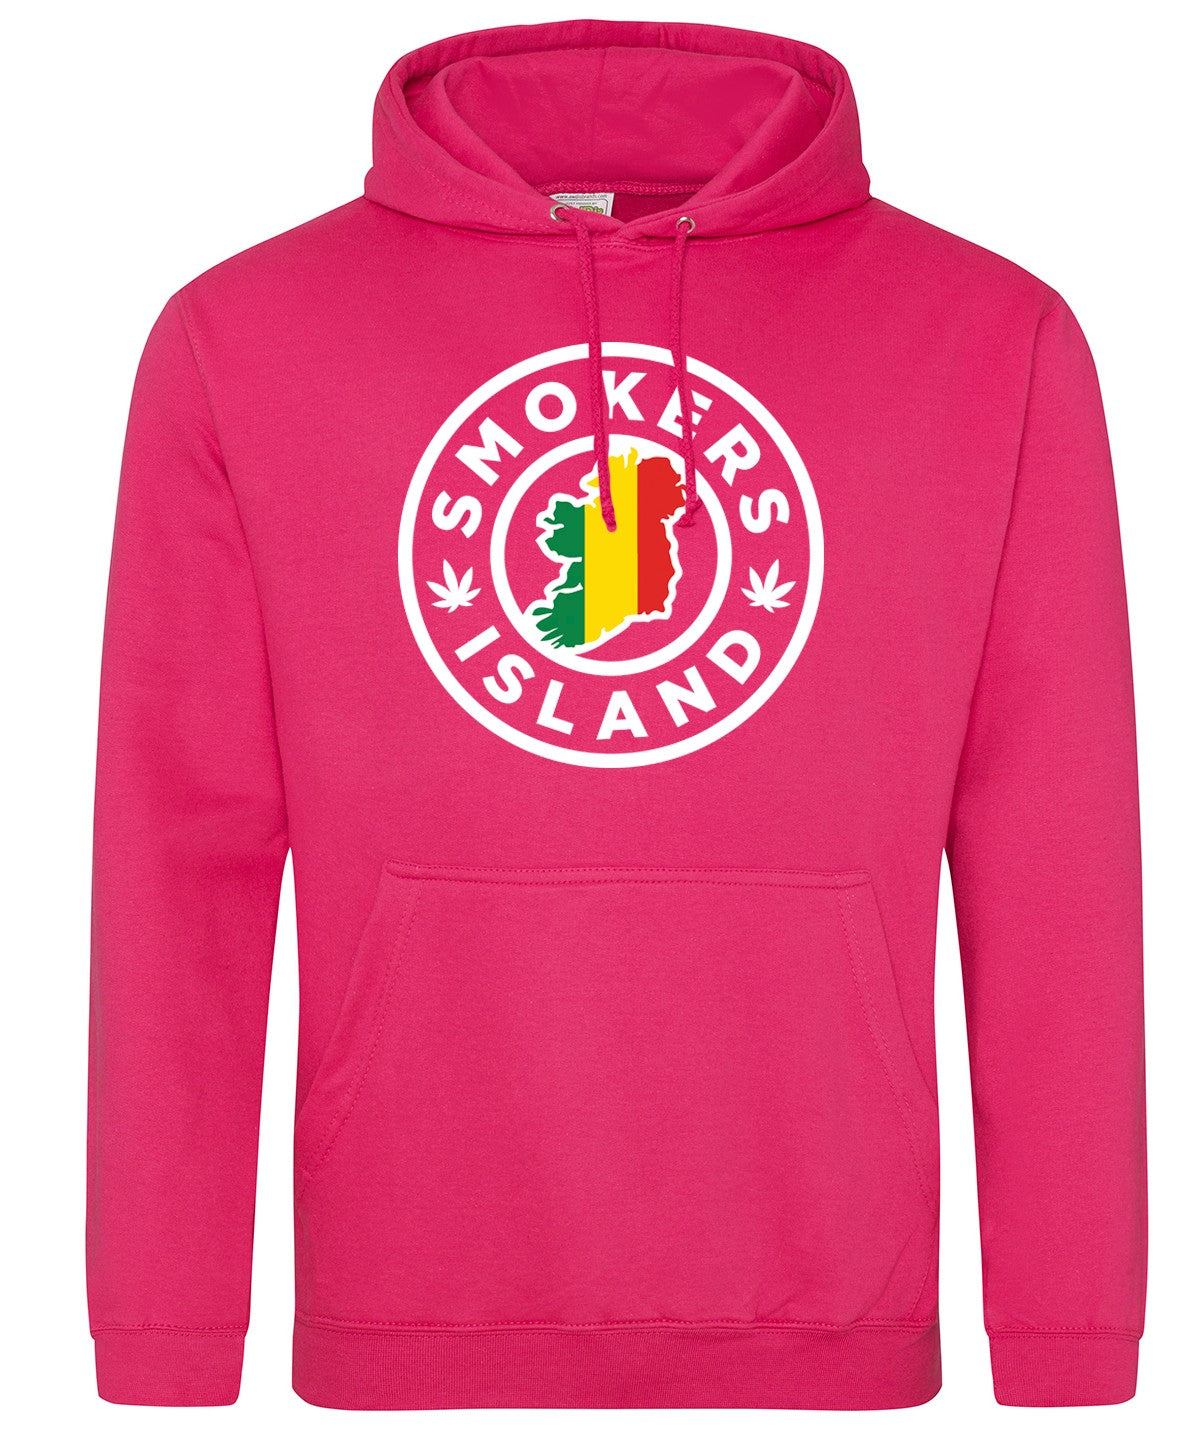 G-Style Hoodie - Smokers Island (Pink)